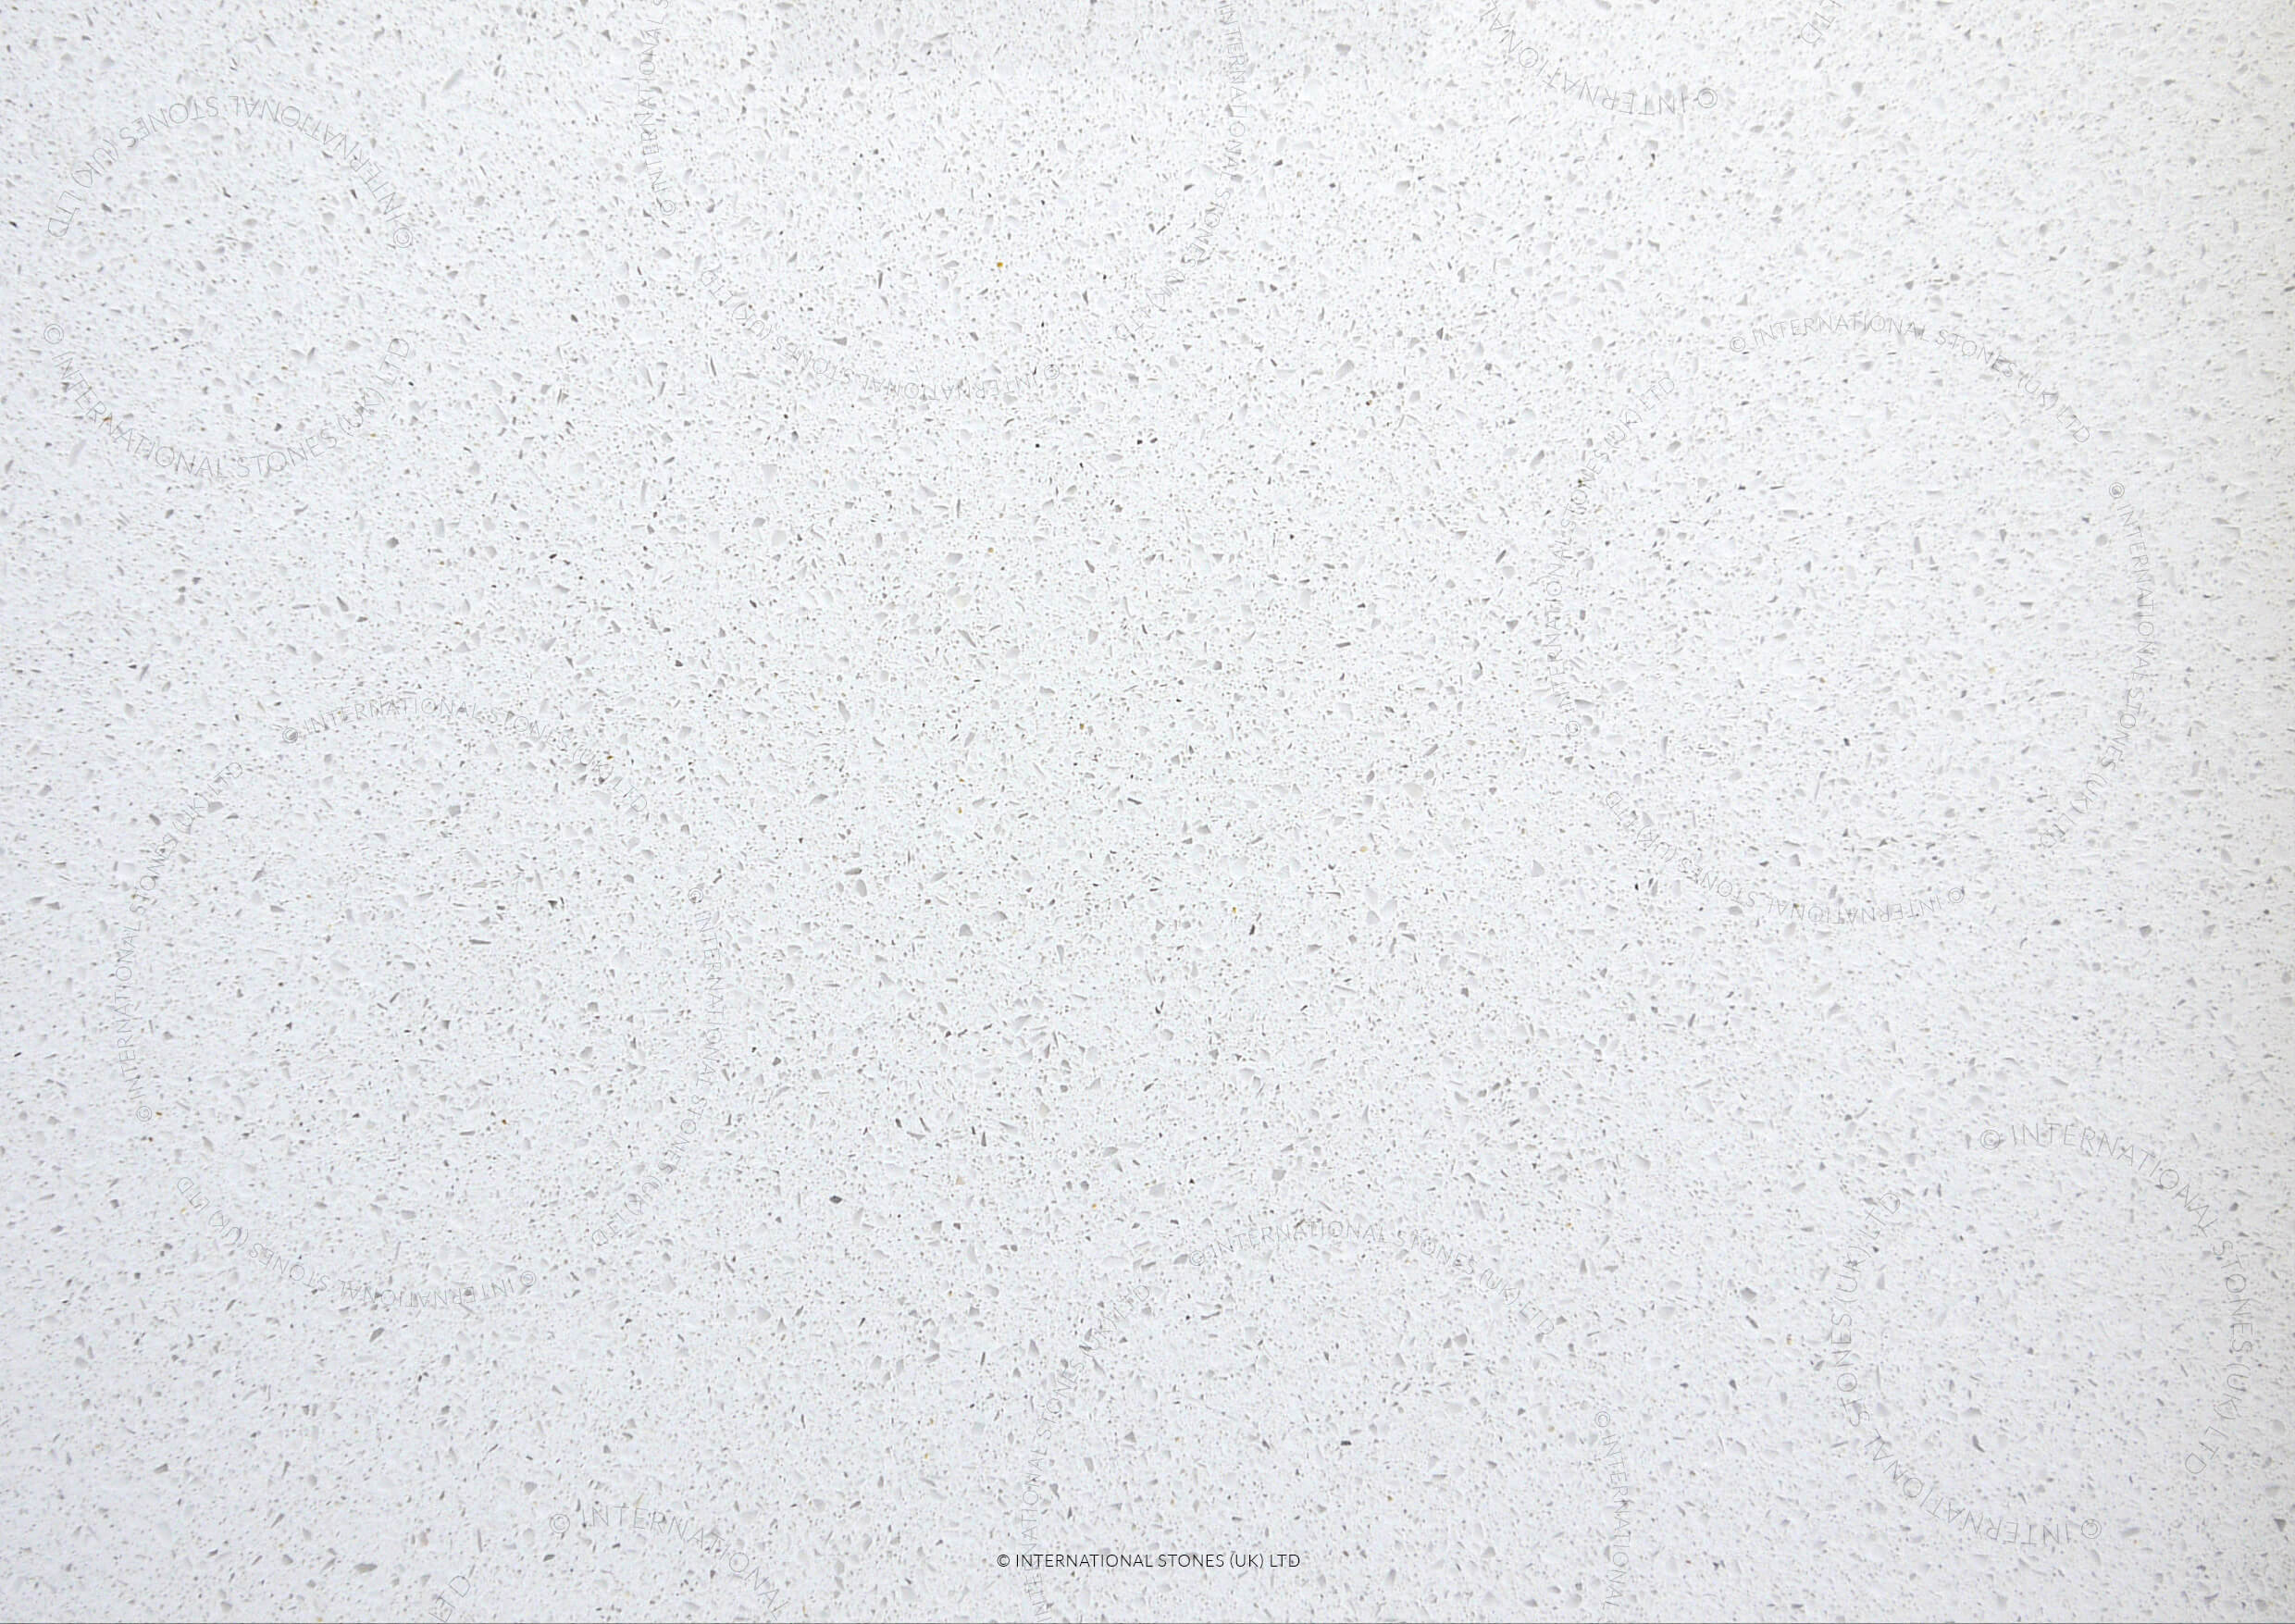 International Stone IQ Blanco Maple - West-Yorkshire - Guiseley-Yeadon